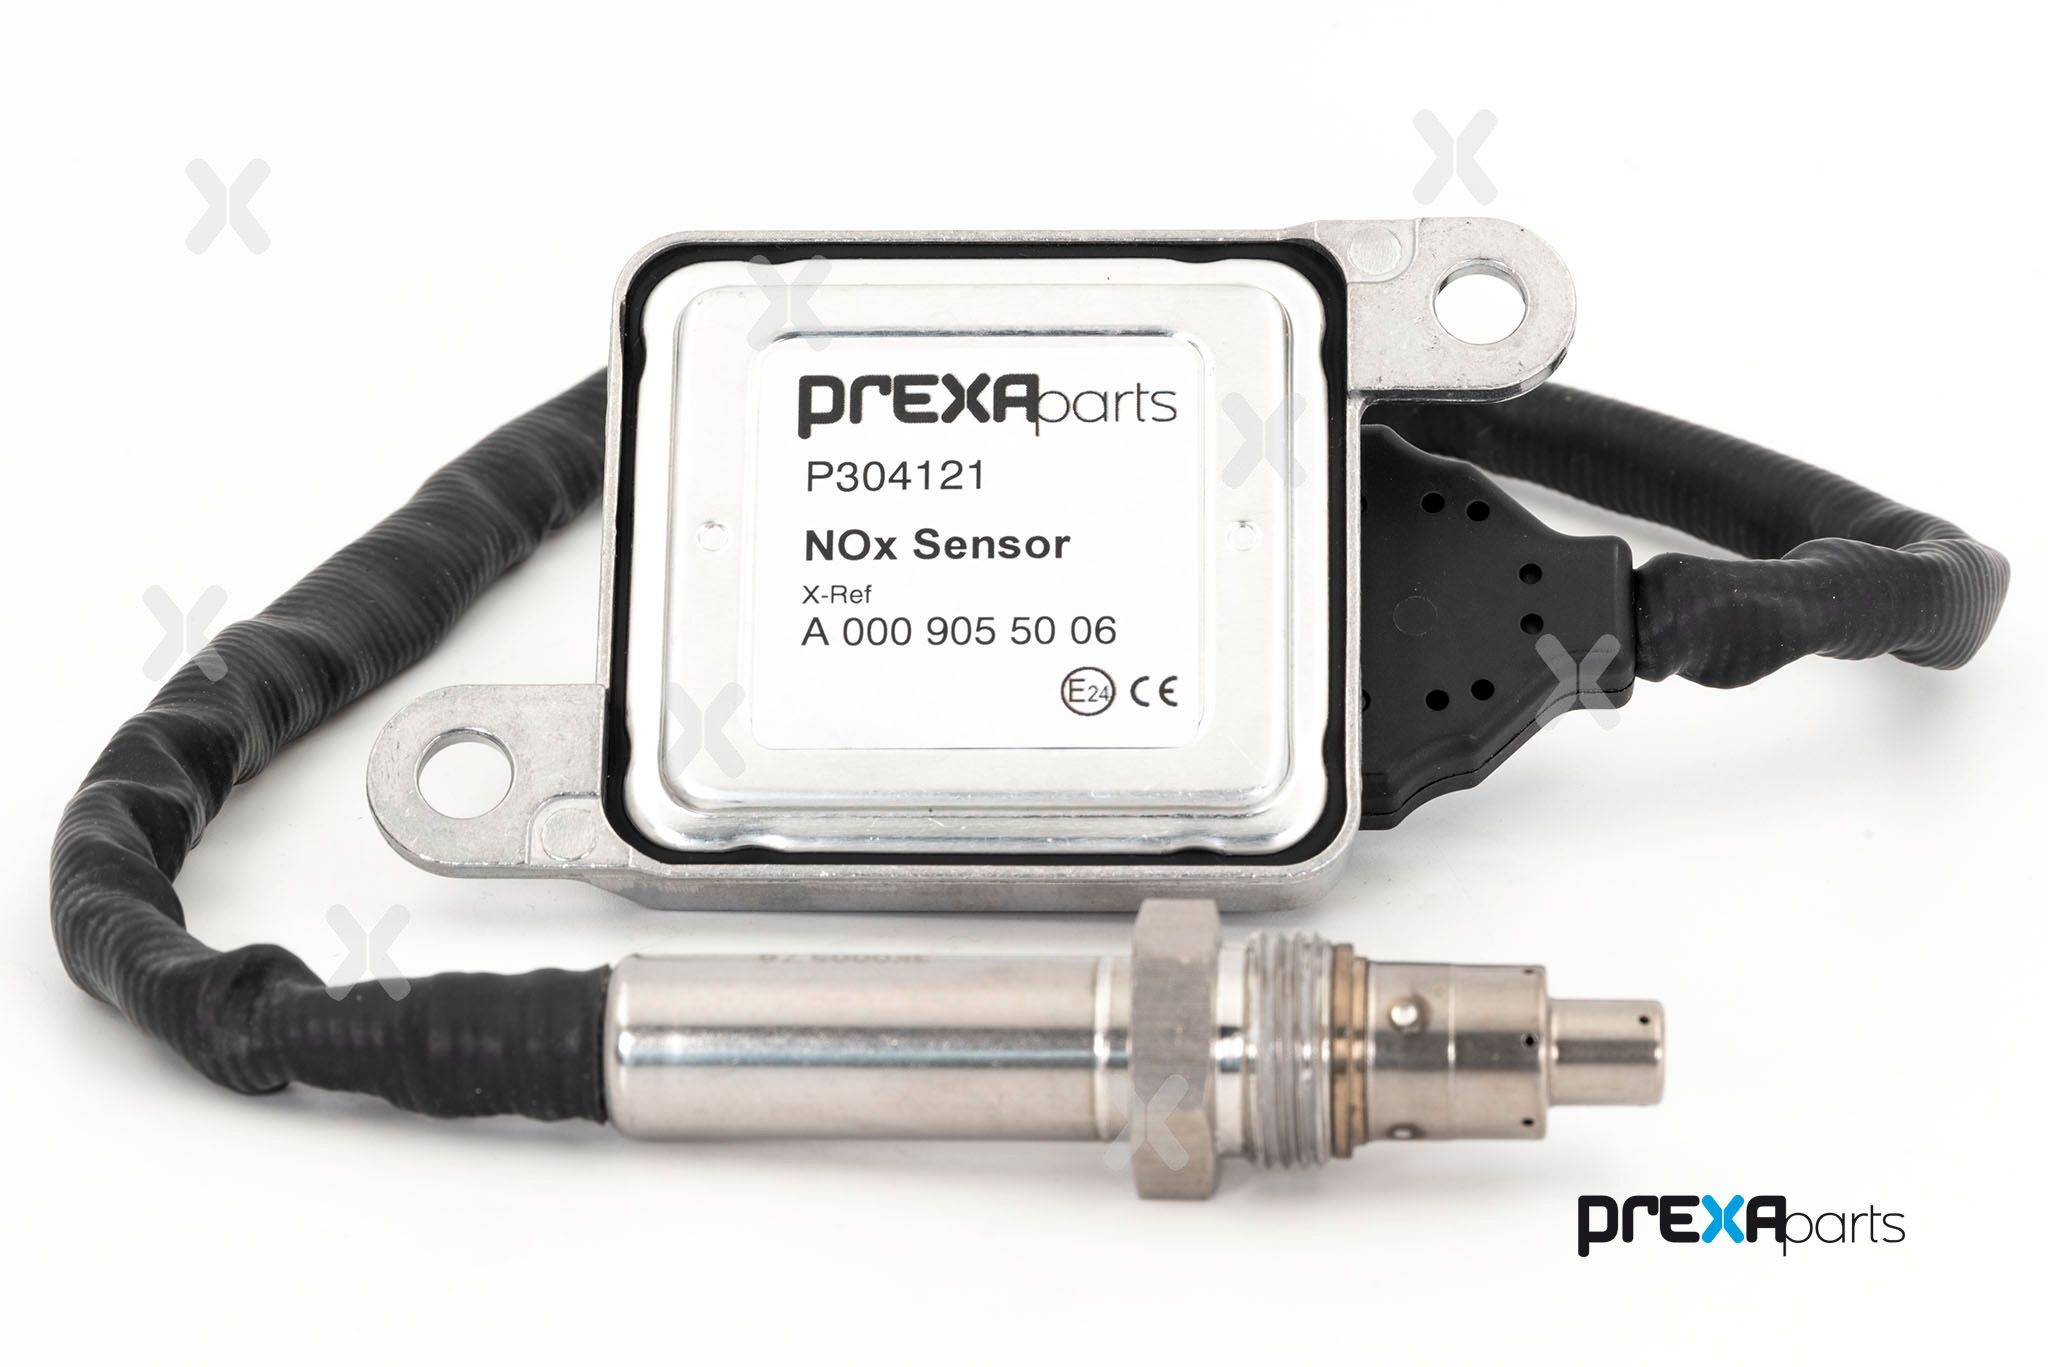 PREXAparts P304121 NOx Sensor, NOx Catalyst 000 905 50 06